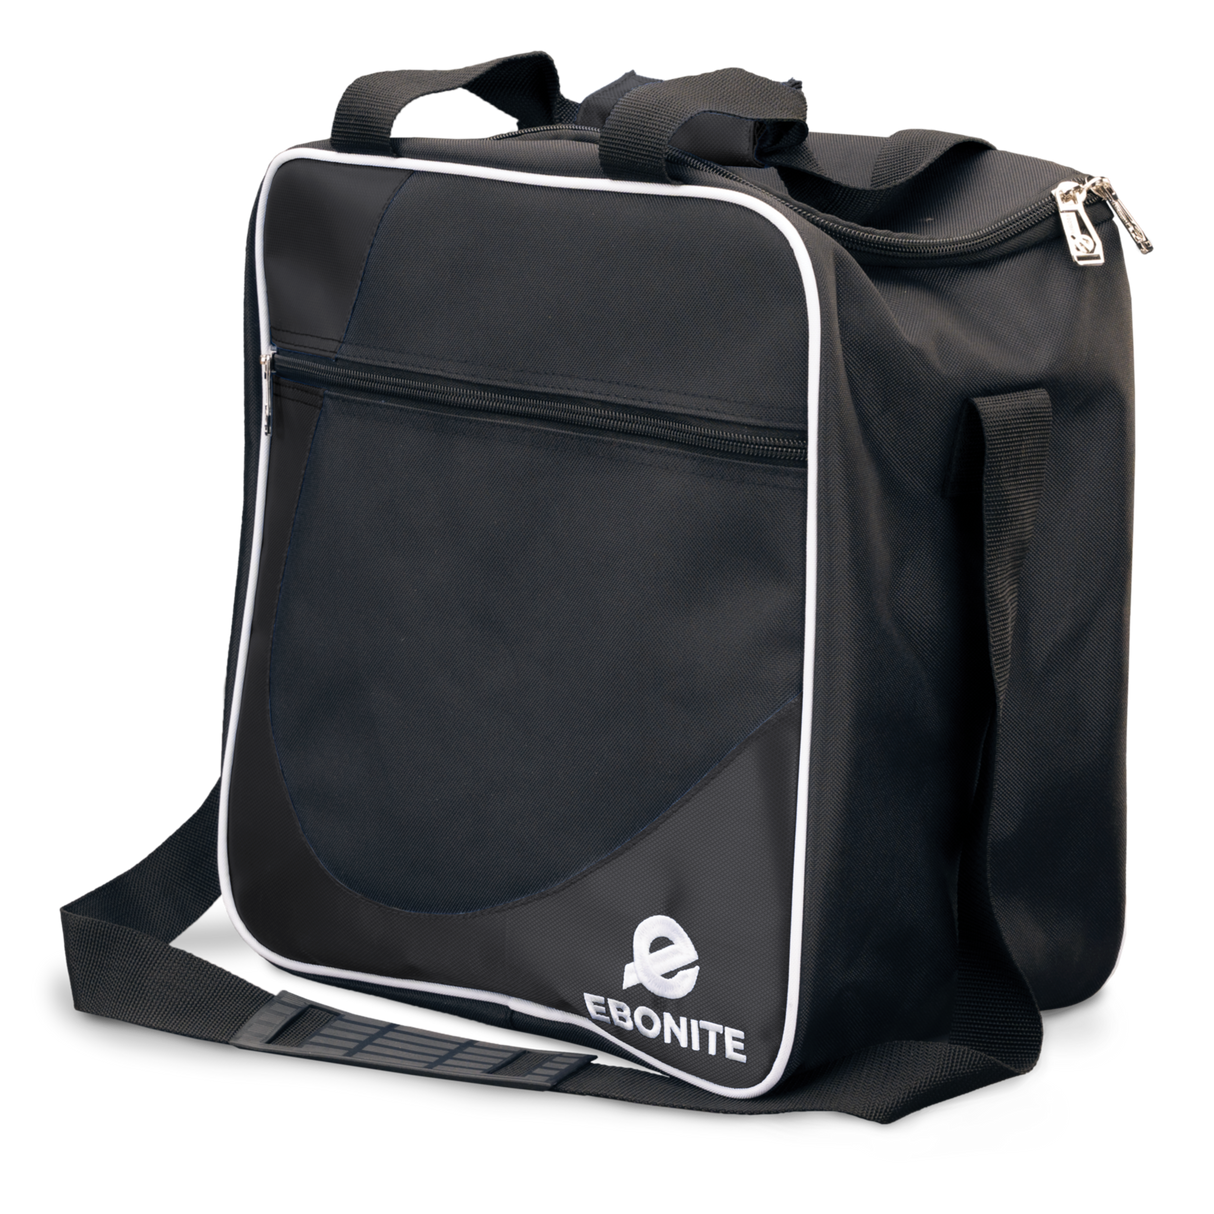 ebonite black single ball bag travel league tournament special code discount perfect